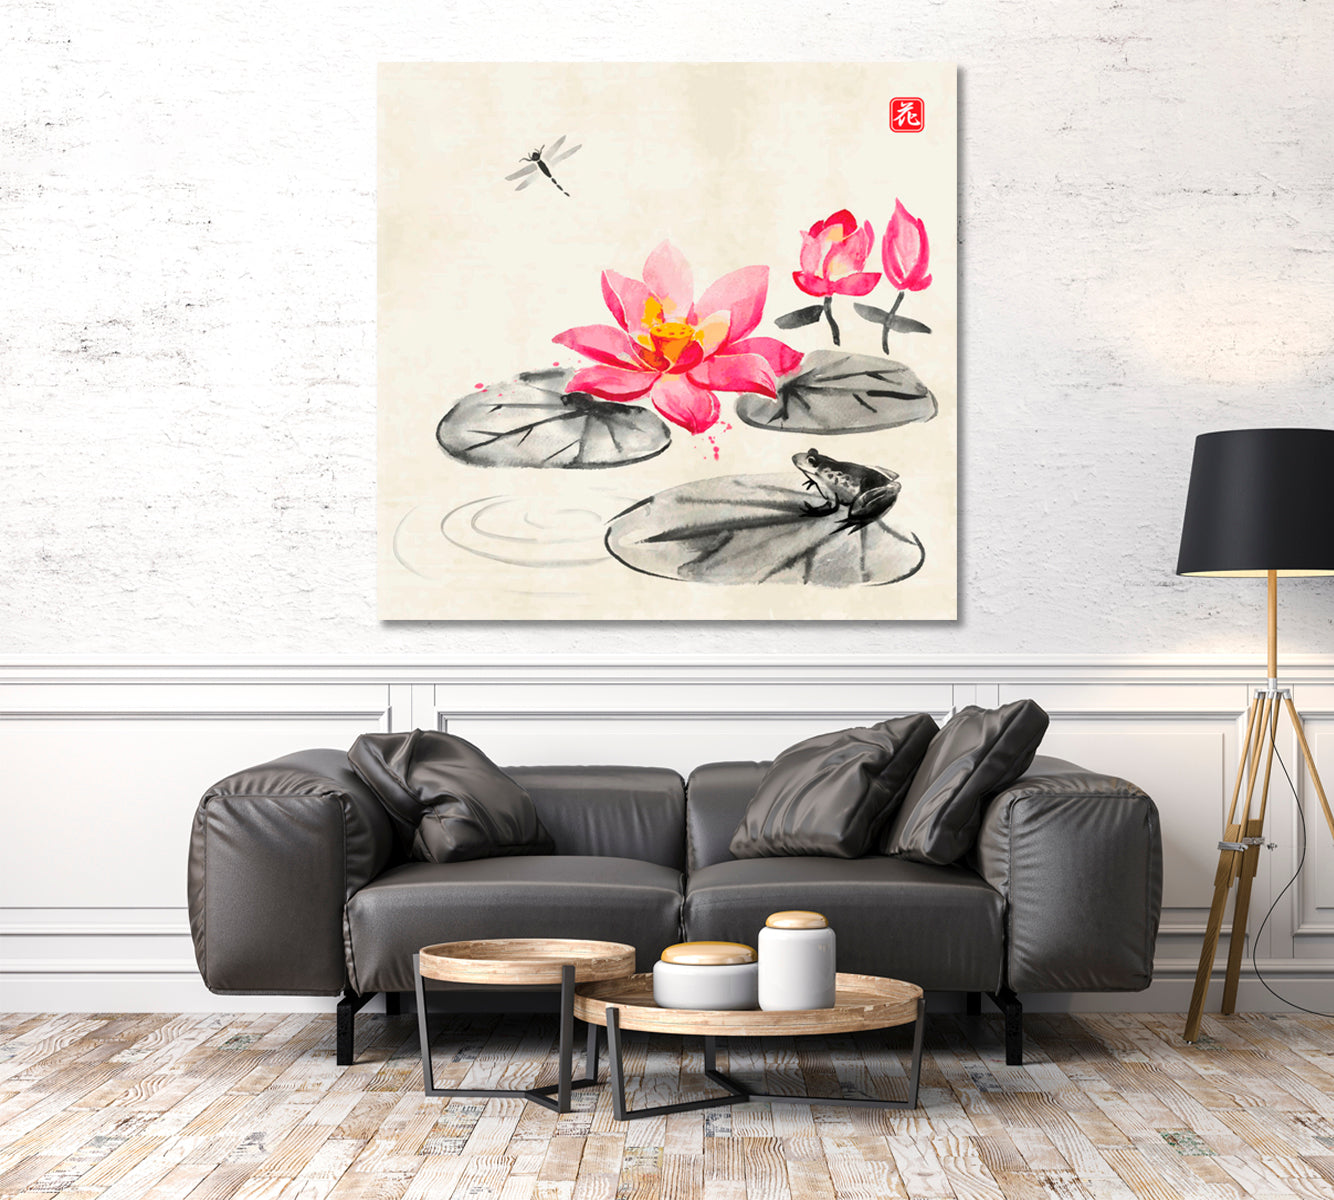 ZEN Feng Shui Shan Shui Lotus Luck To Your Home - S Asian Style Canvas Print Wall Art Artesty 1 Panel 12"x12" 